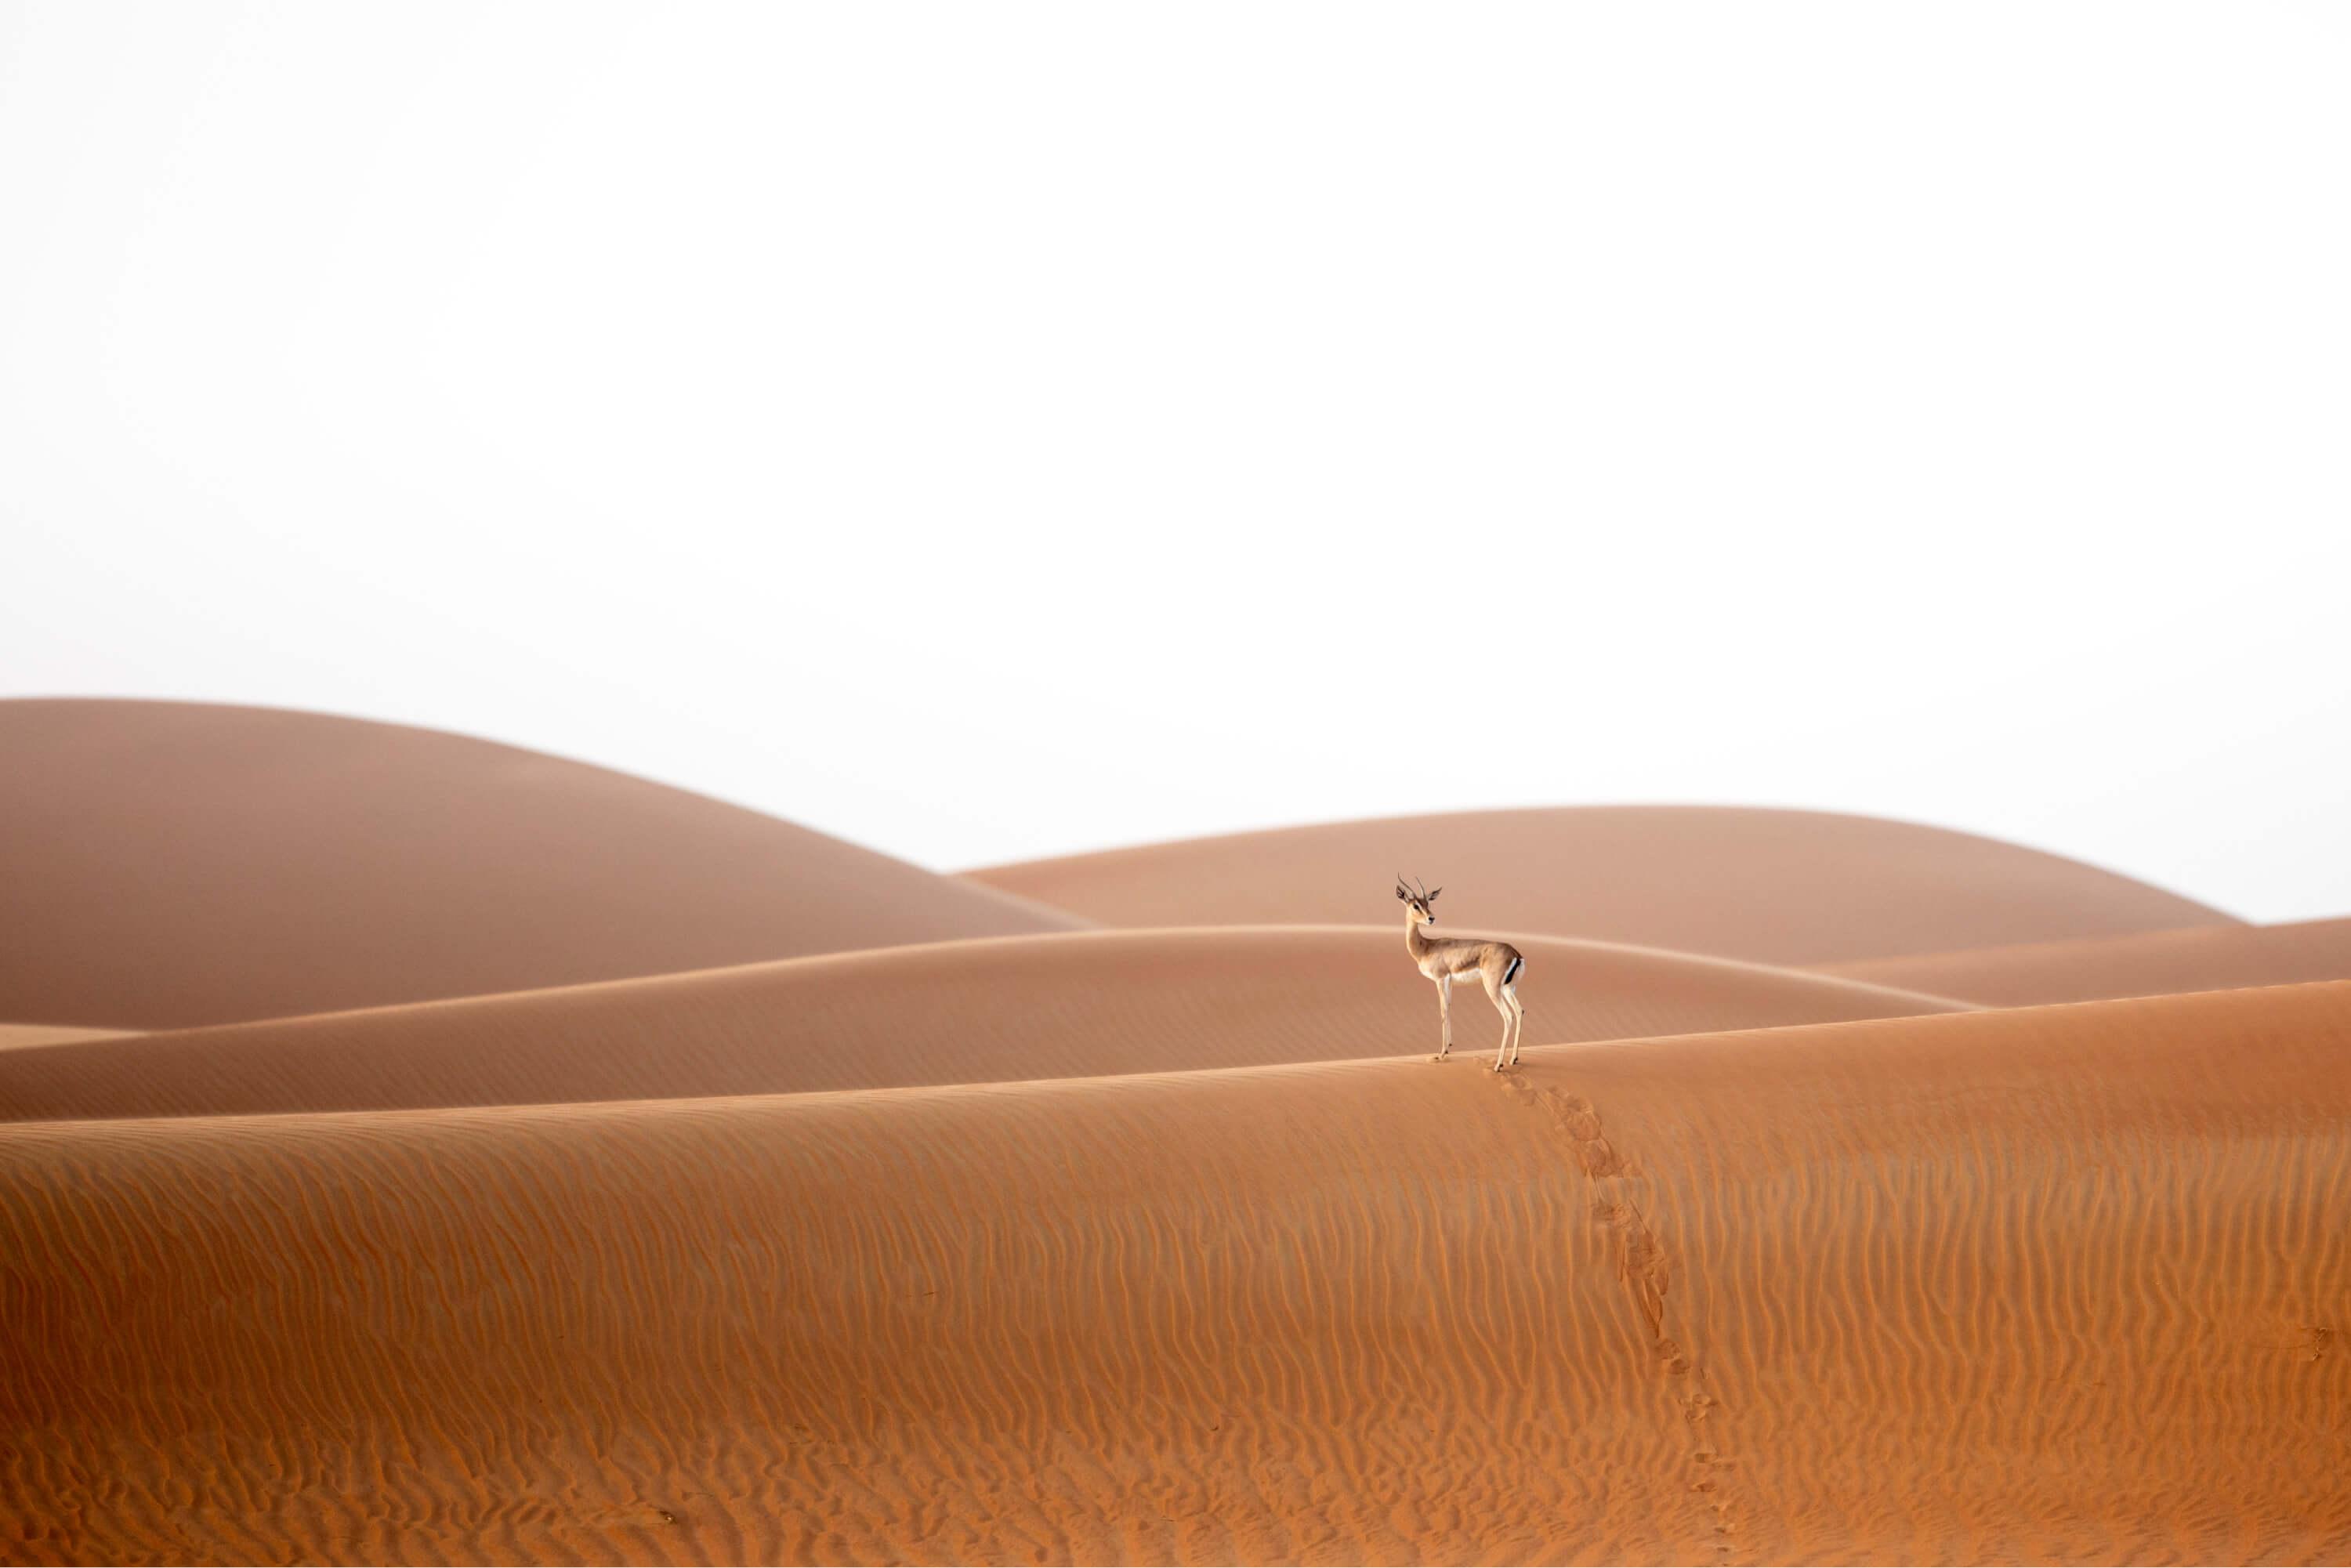 A lone Arabian Sand Gazelle makes a path through the red dunes of the Al Ain desert. 
Photographer: Hamad Al Kaabi Location: Al Ain, UAE